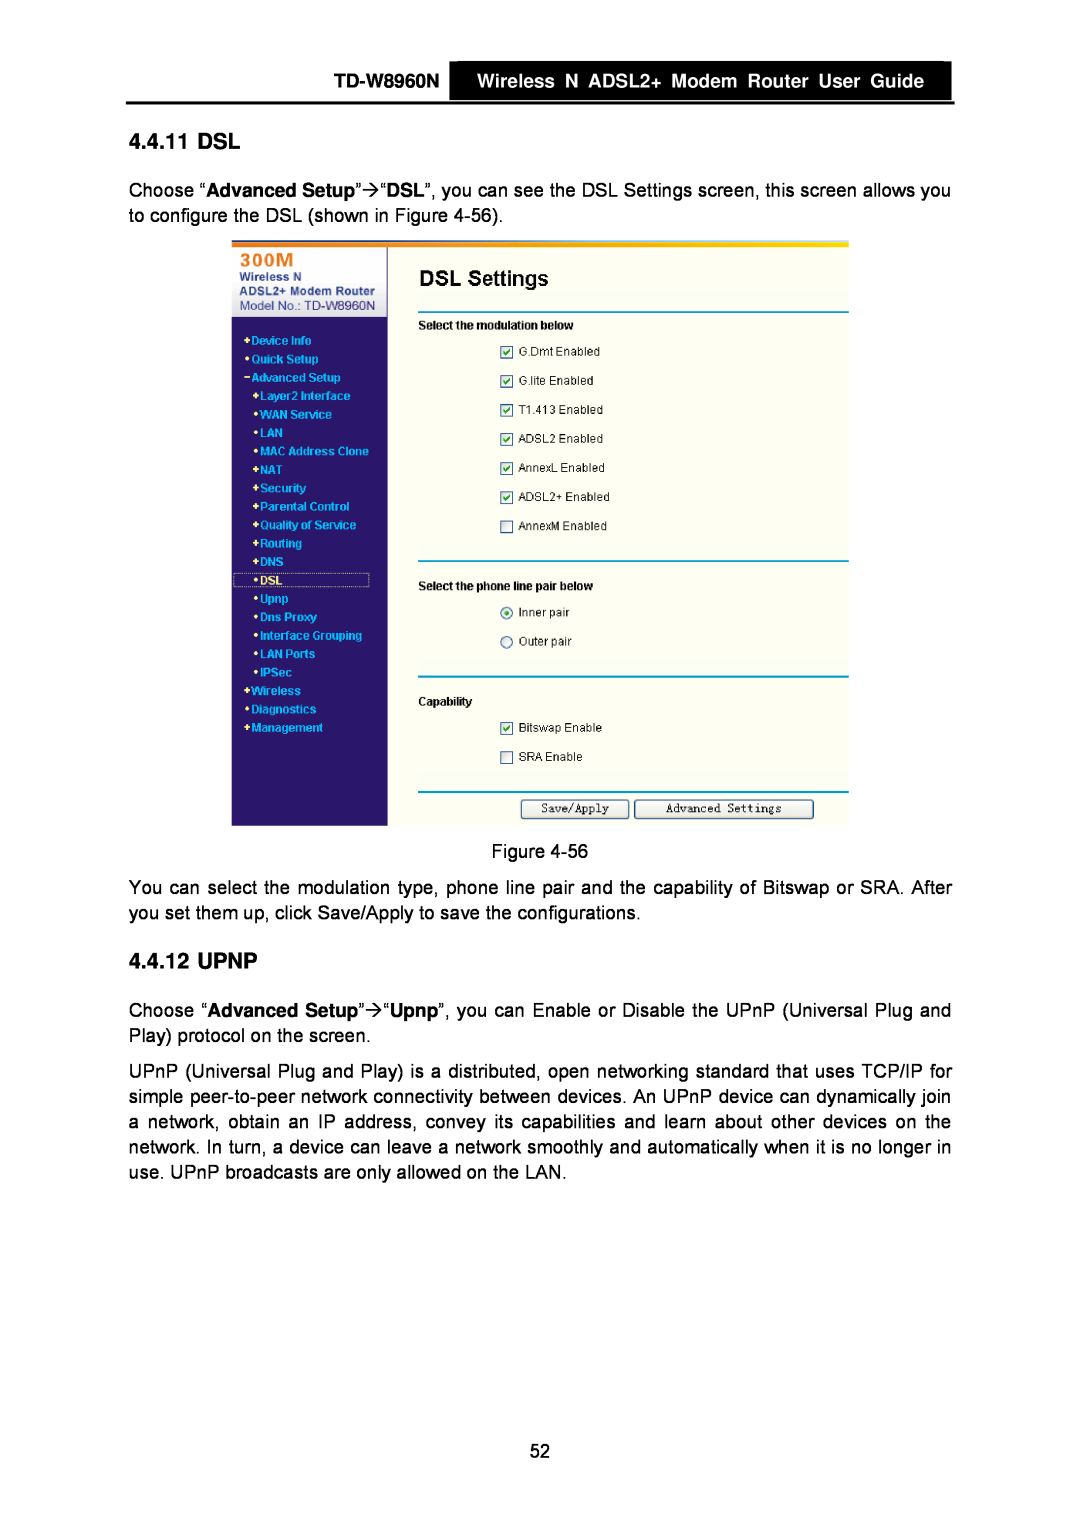 TP-Link manual 4.4.11 DSL, Upnp, TD-W8960N Wireless N ADSL2+ Modem Router User Guide 